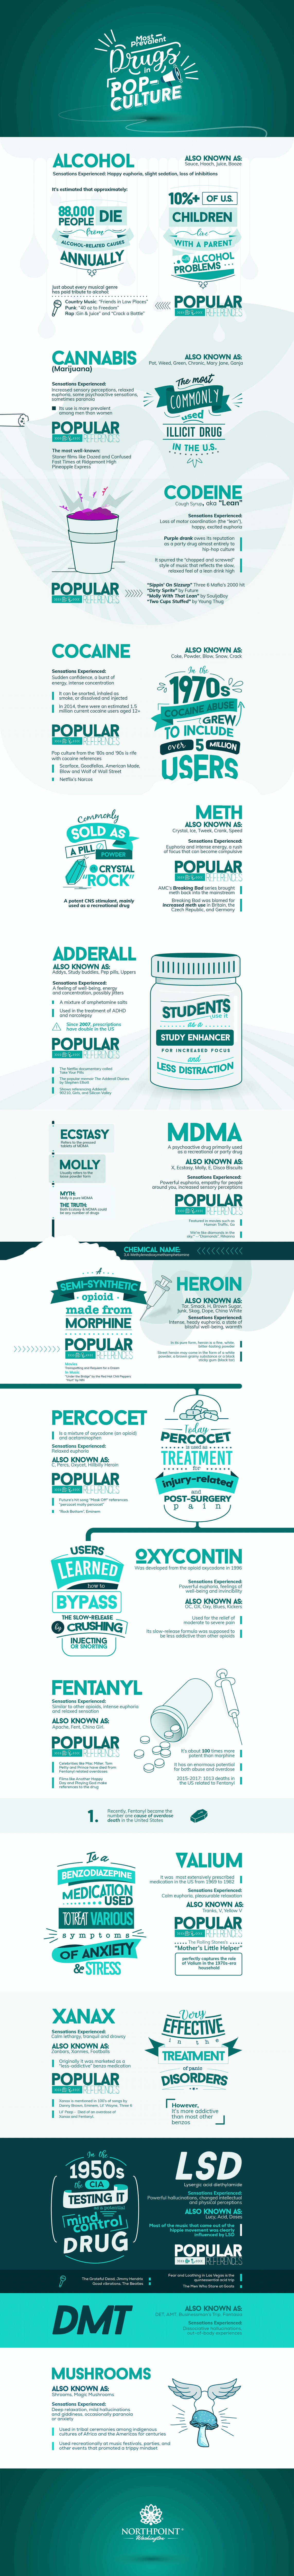 Drugs in Popular Culture Inforgraphic